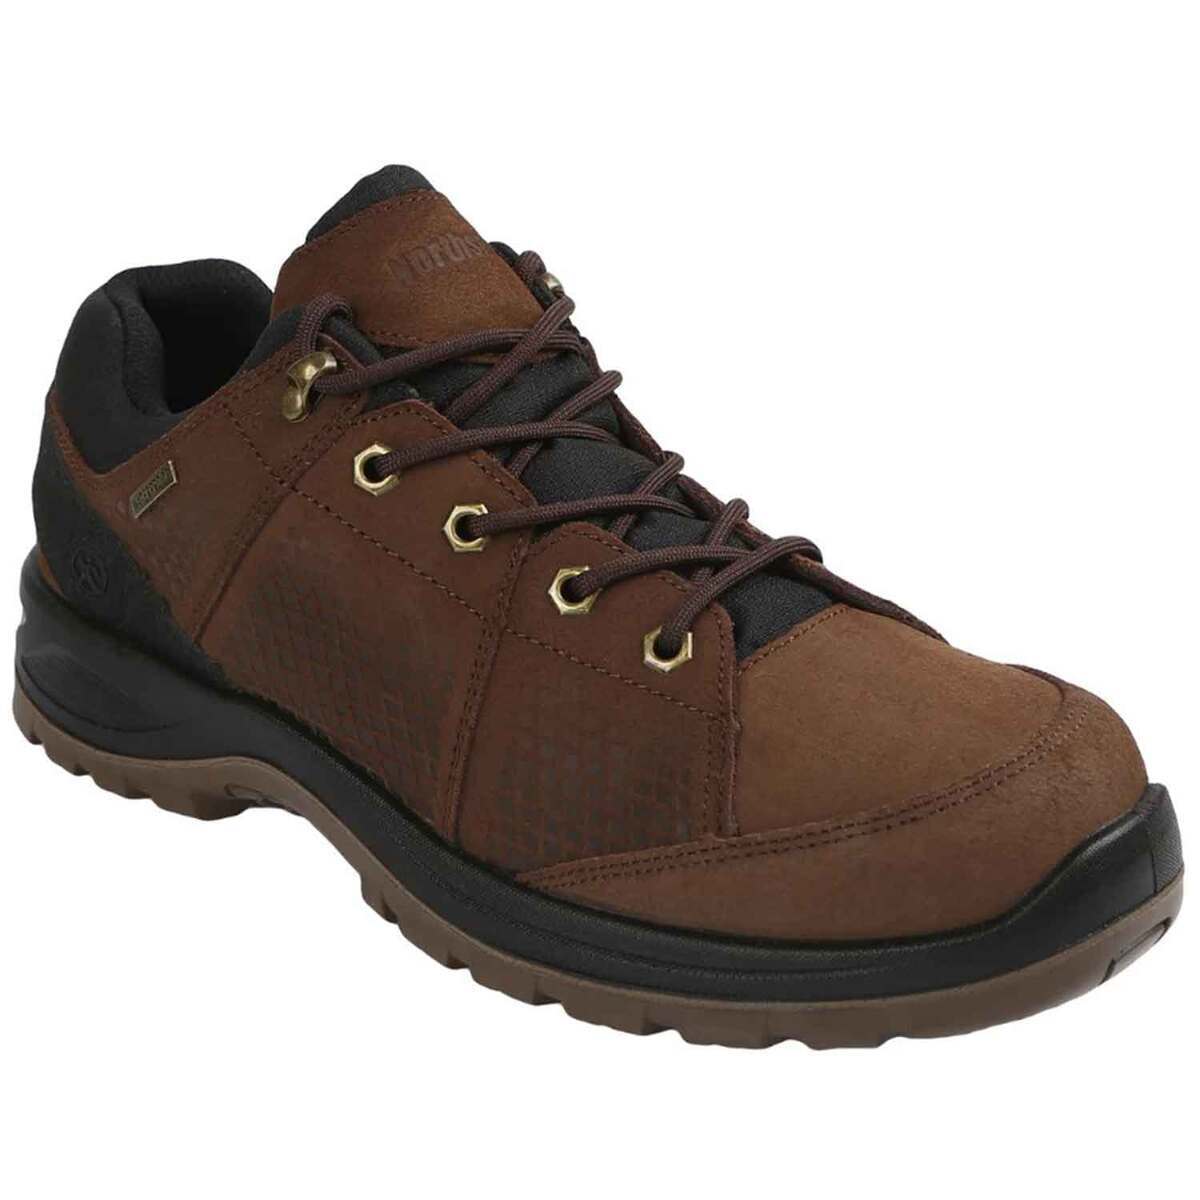 Northside Men's Rockford Leather Waterproof Low Hiking Shoes ...